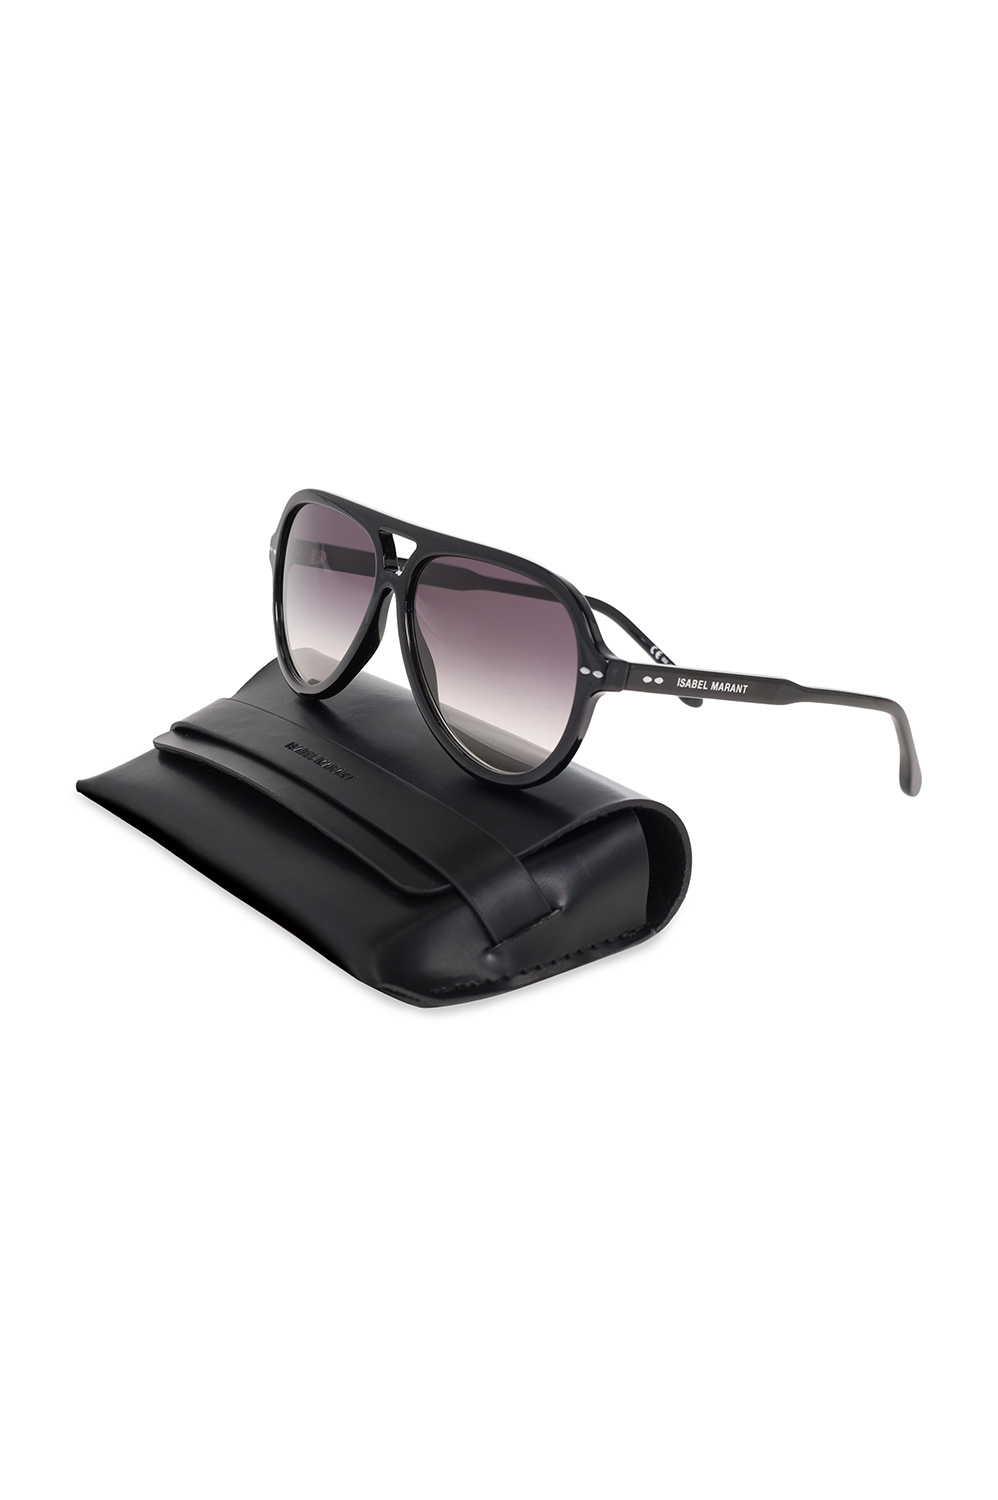 Isabel Marant rudy project spinshield ergonomic sunglasses item